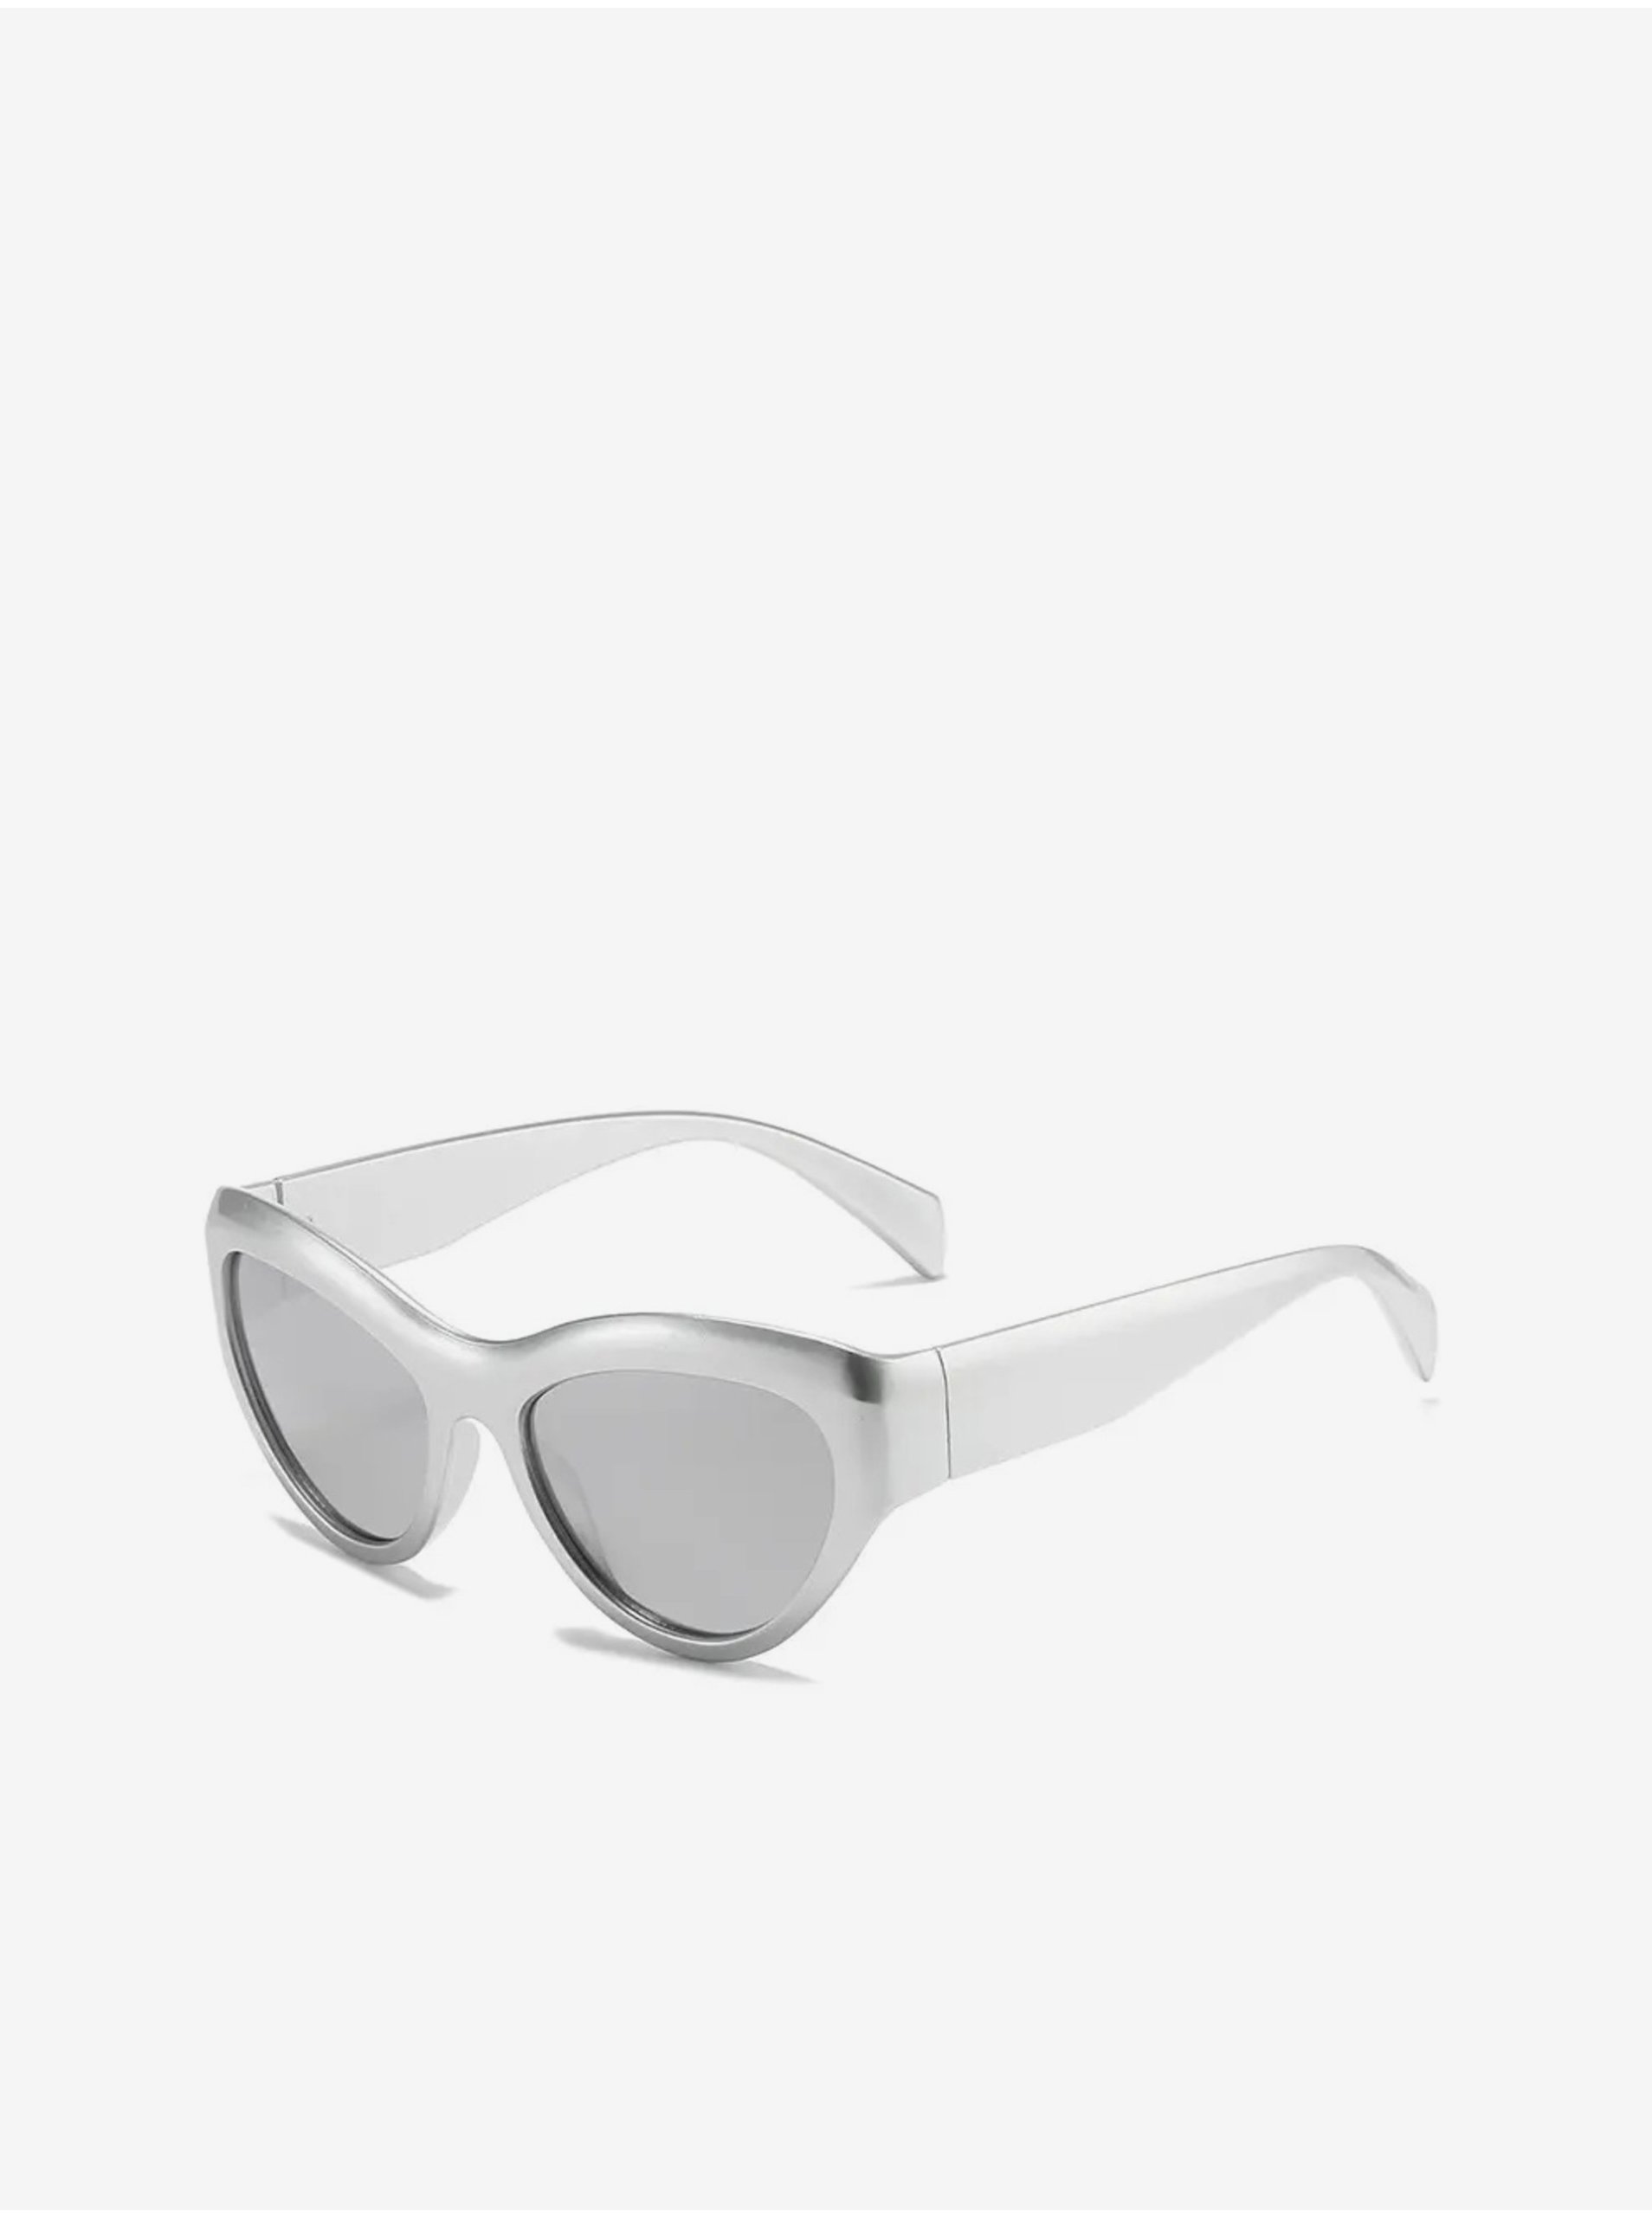 E-shop Strieborné unisex športové slnečné okuliare VeyRey Gimphrailius